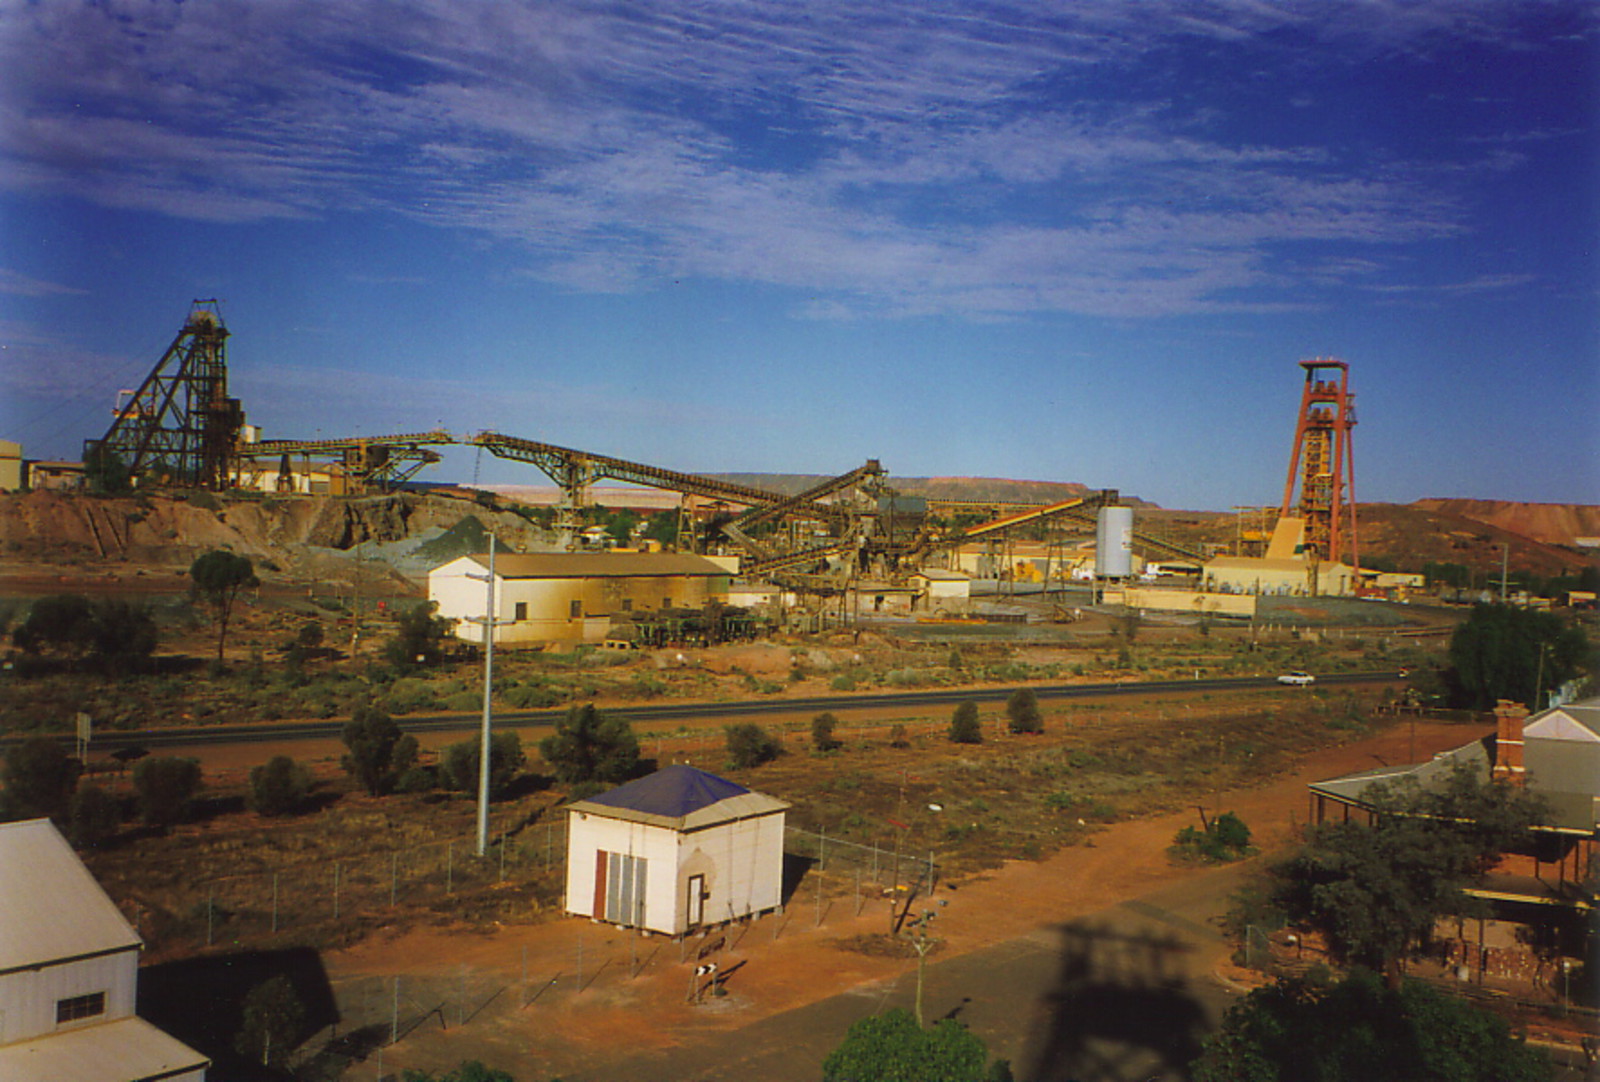 The gold mines of Kalgoorlie